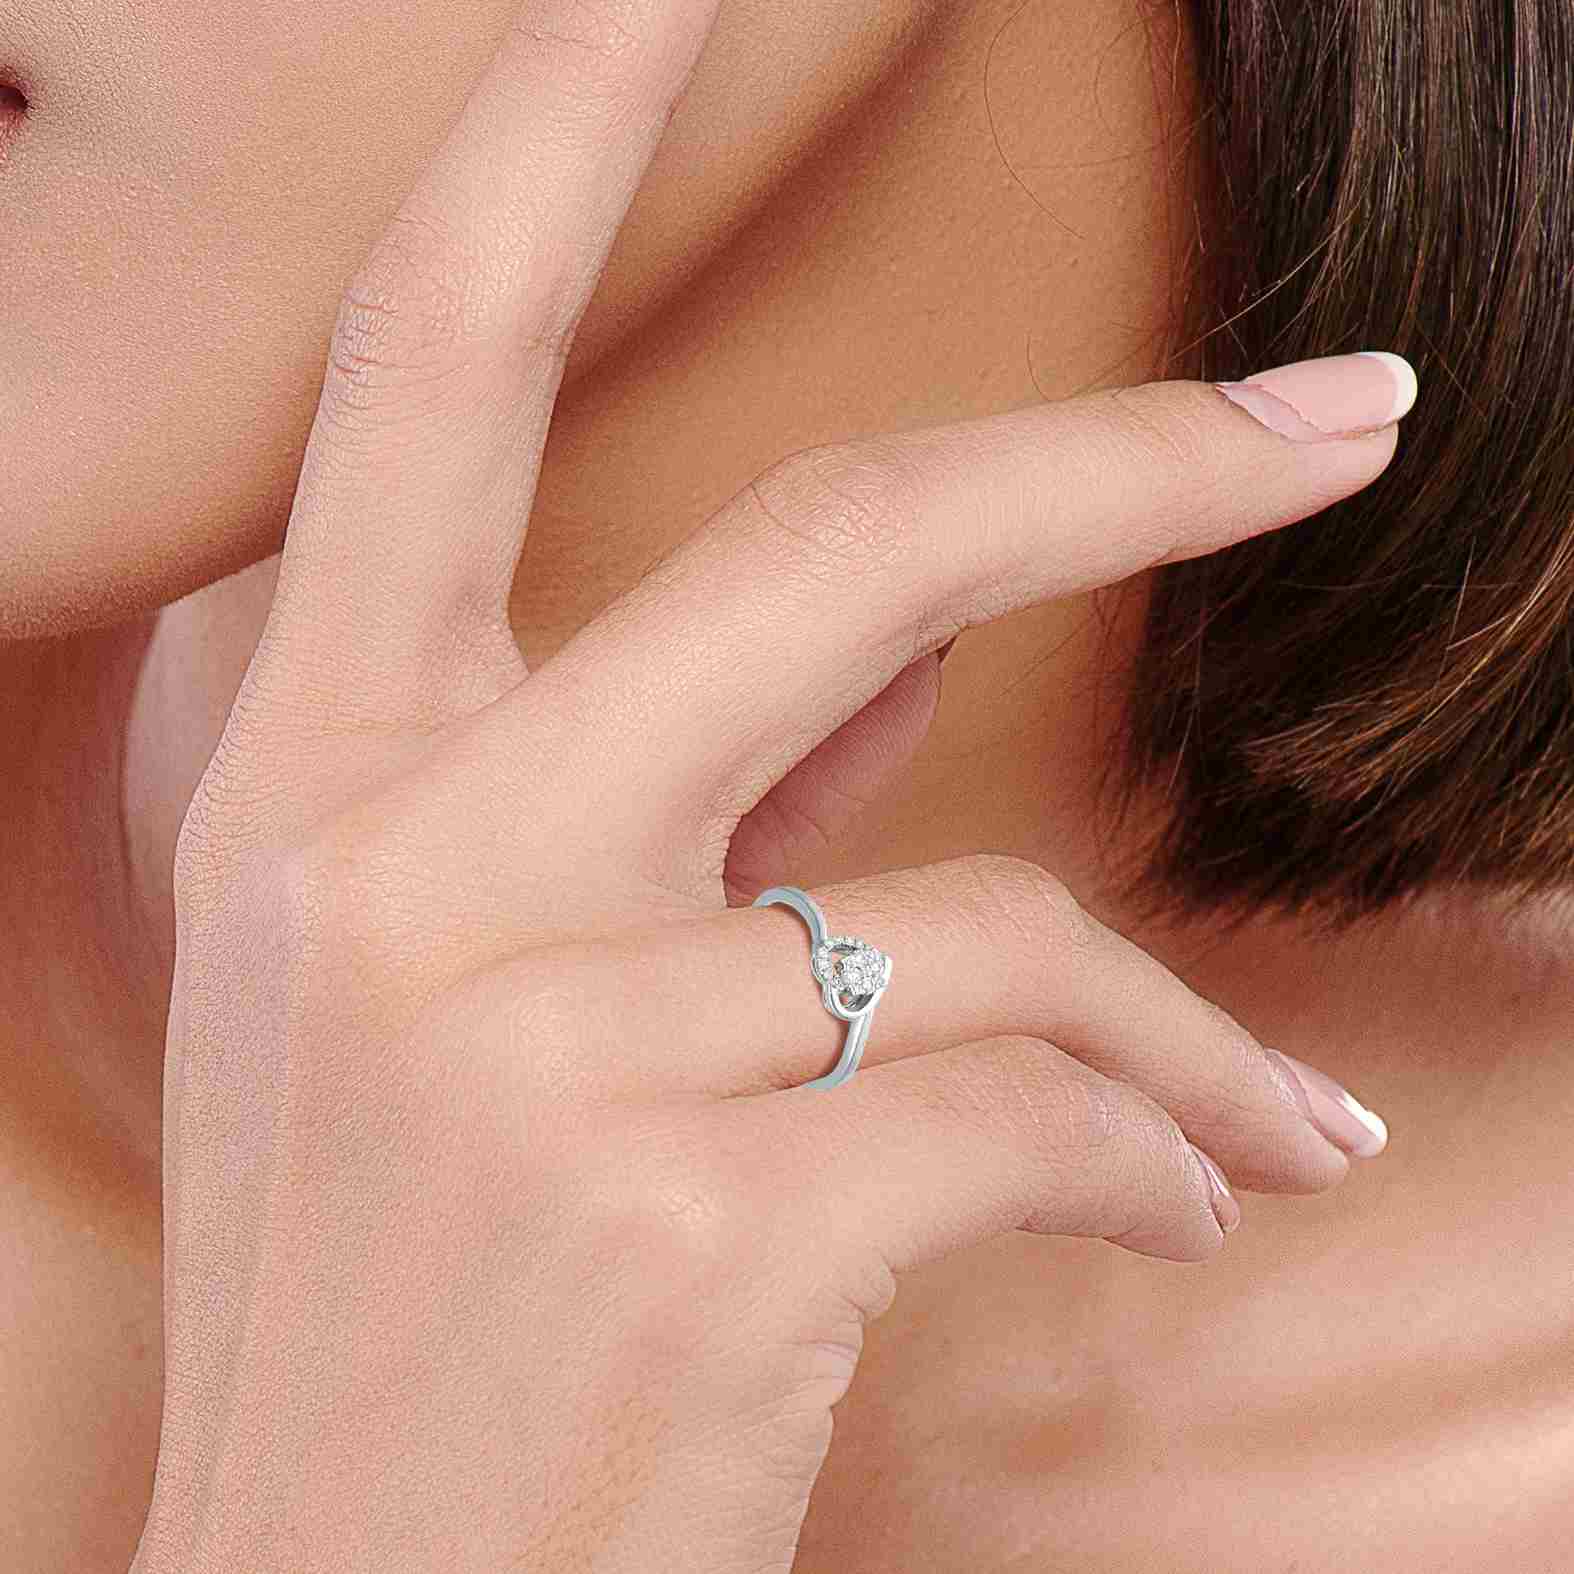 Diamond Ladies Ring CWF0798